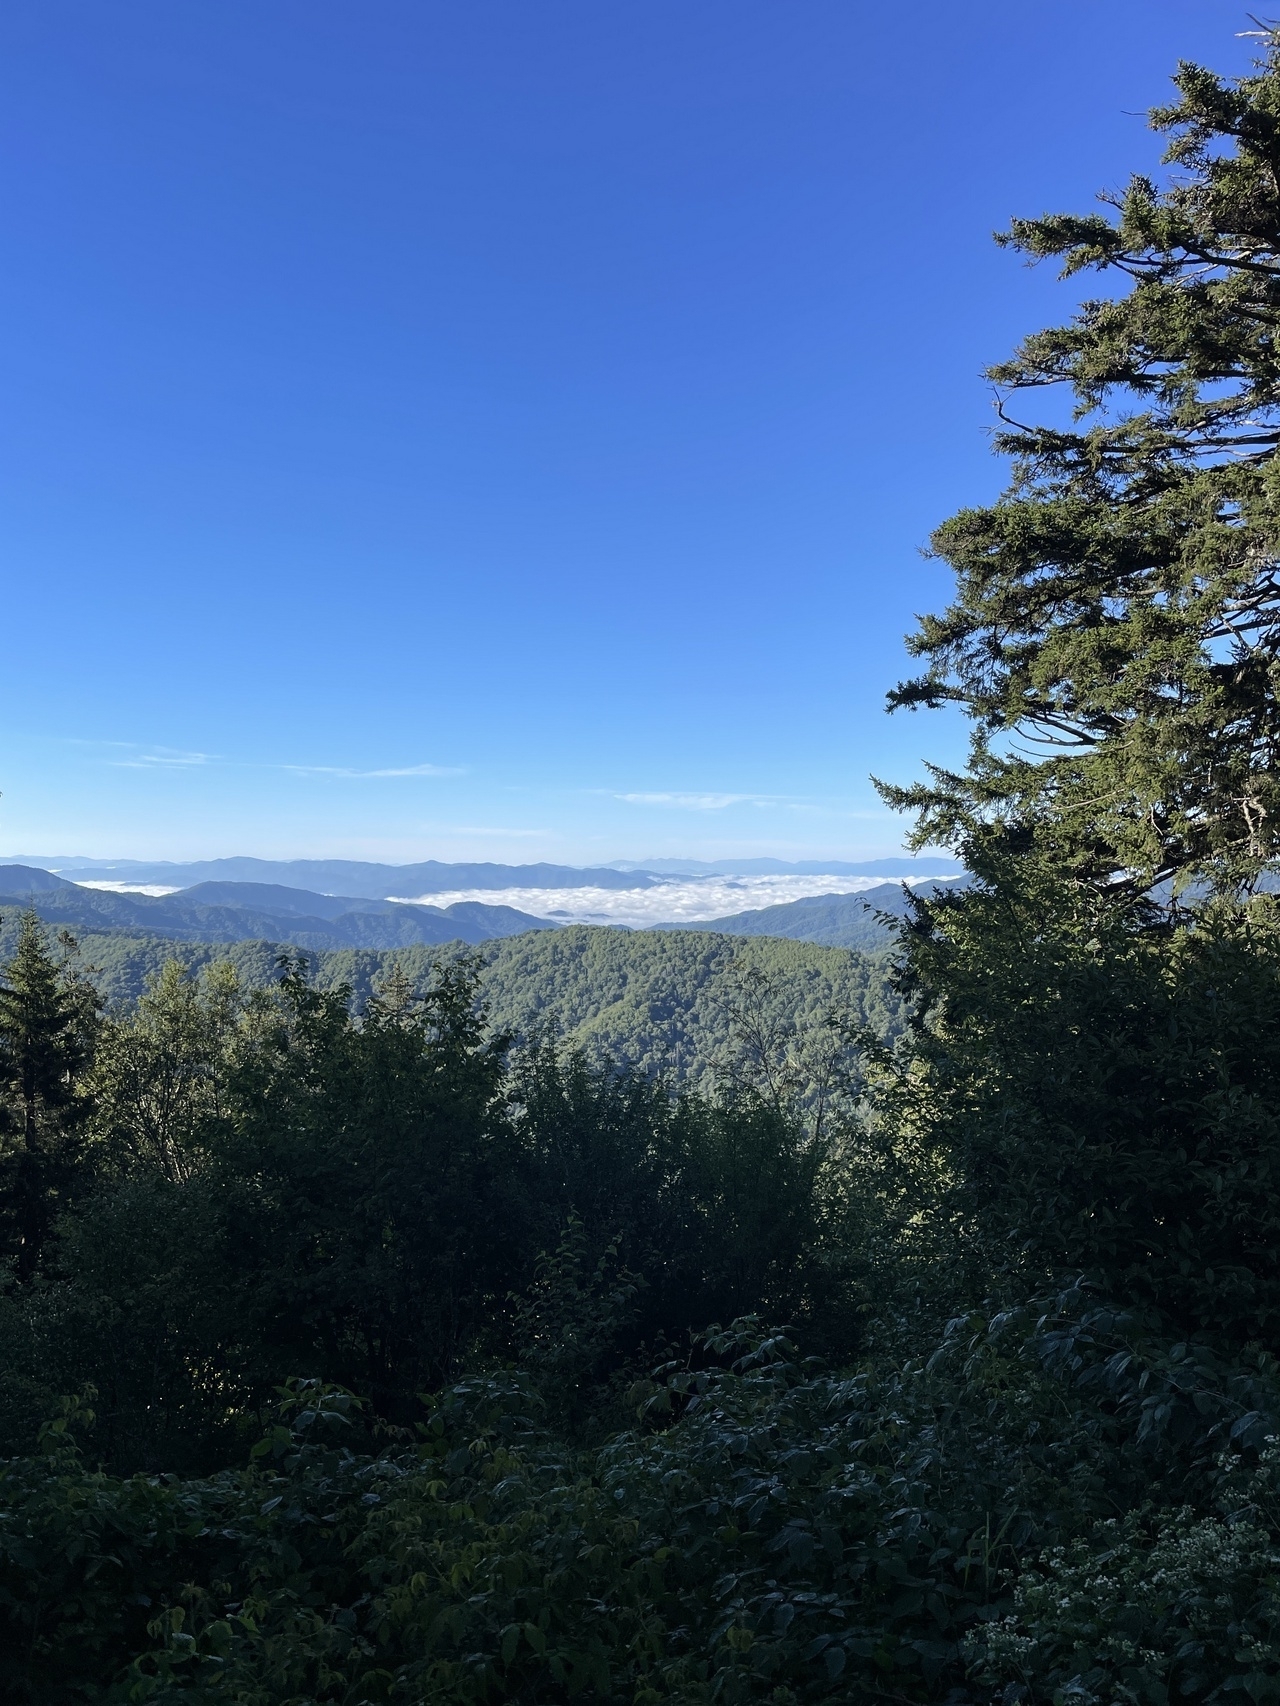 The Smoky Mountains